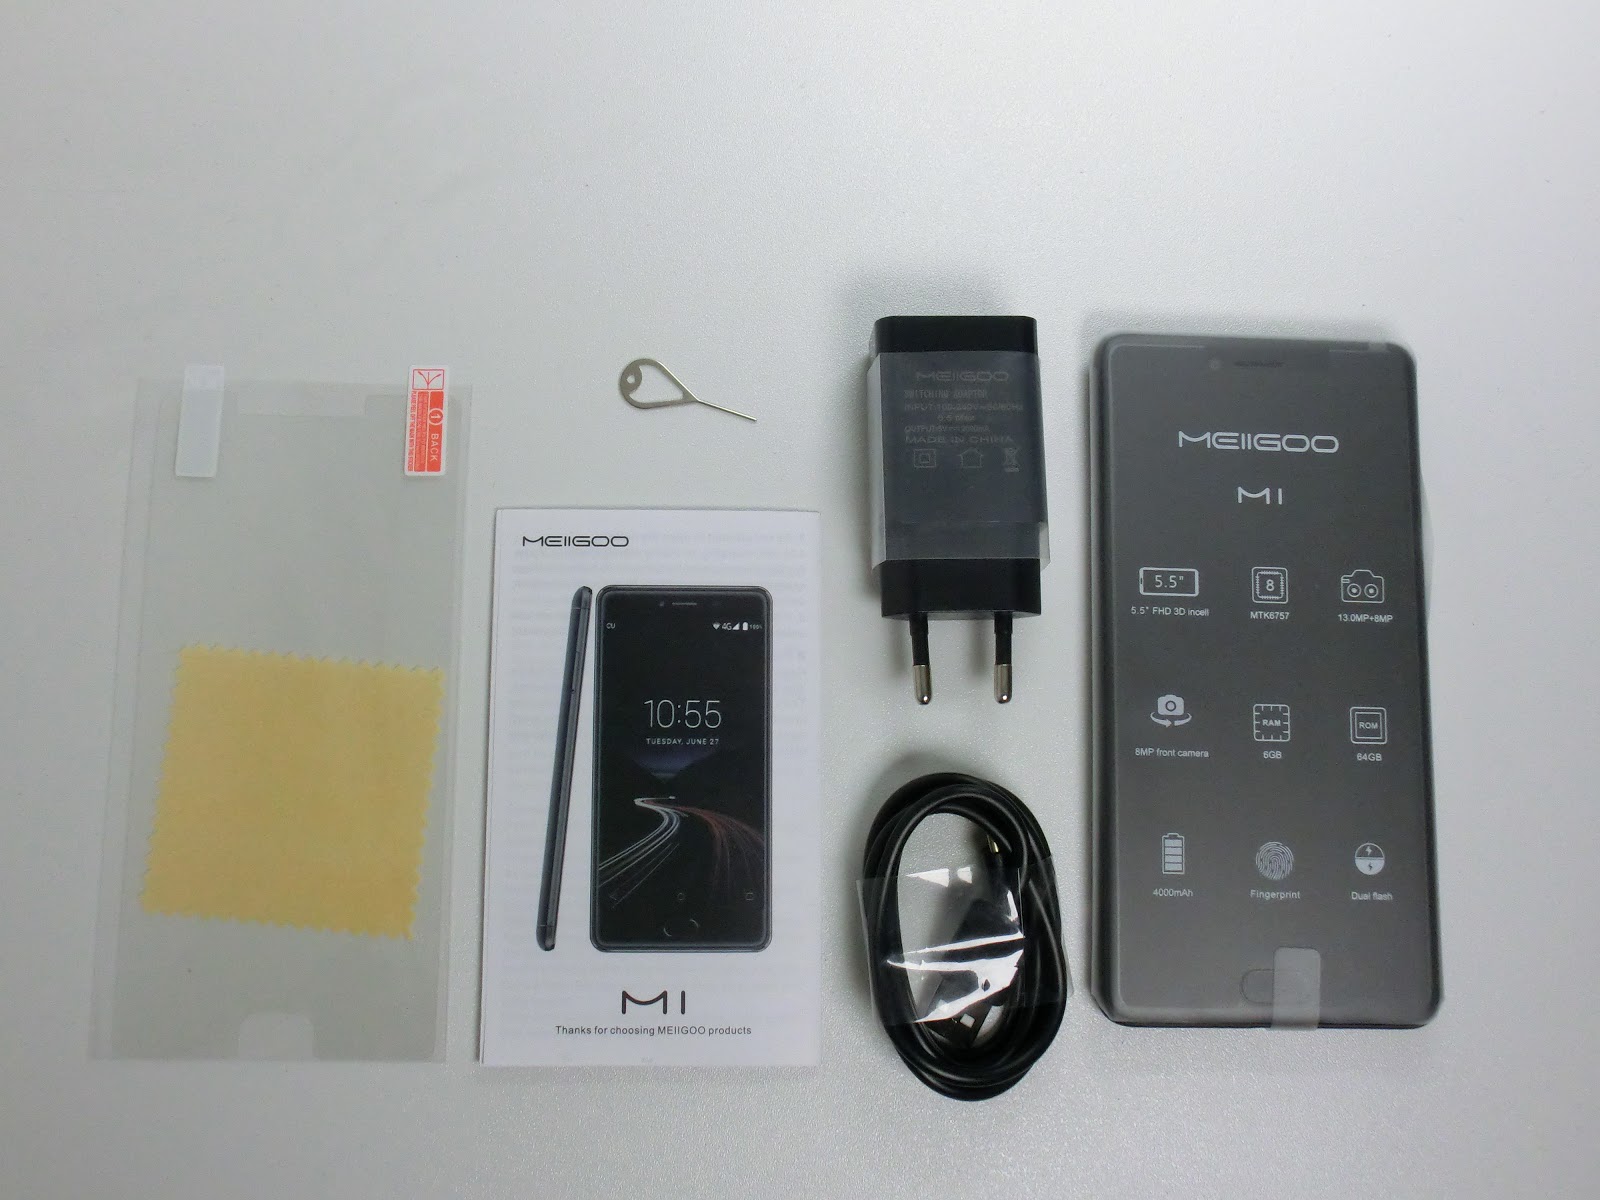 [REVIEW] MEIIGOO M1 (Phablet 4G, Dual Camera, Fingerprint Scanner, 6GB RAM)